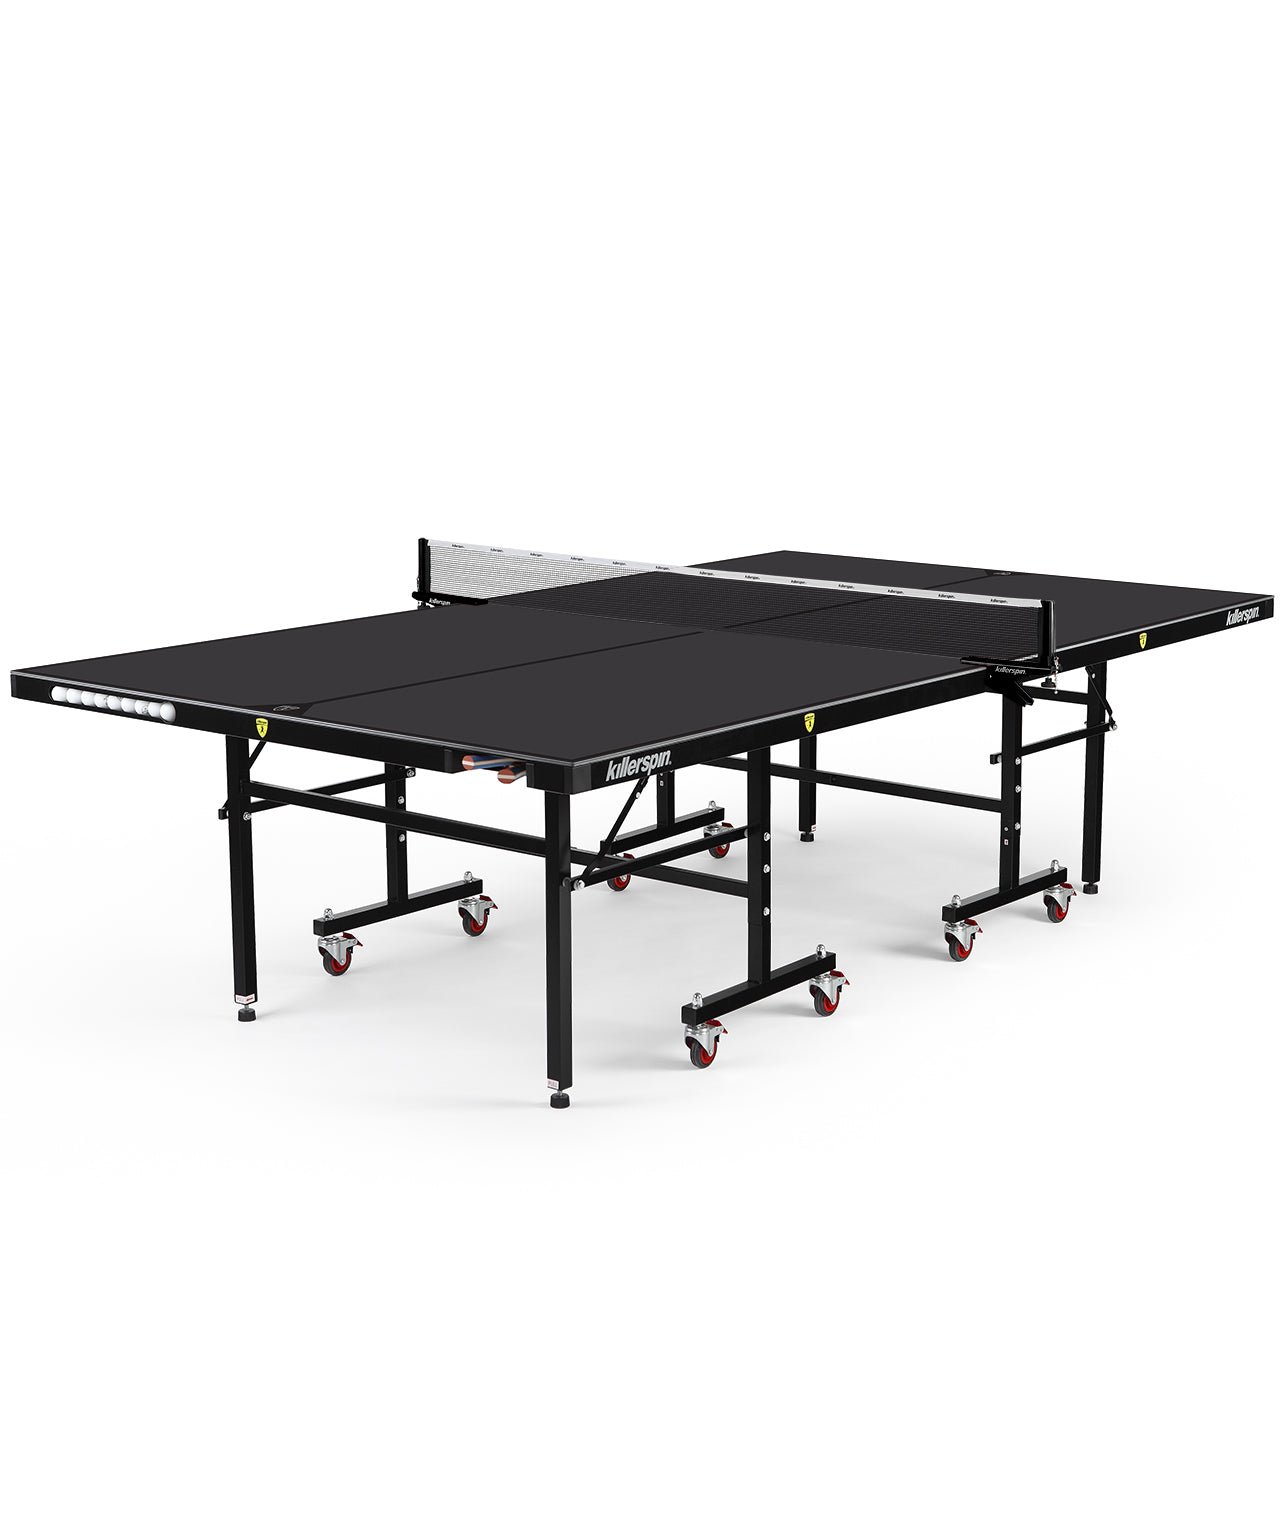 MyT10 BlackStorm Outdoor Ping Pong Table